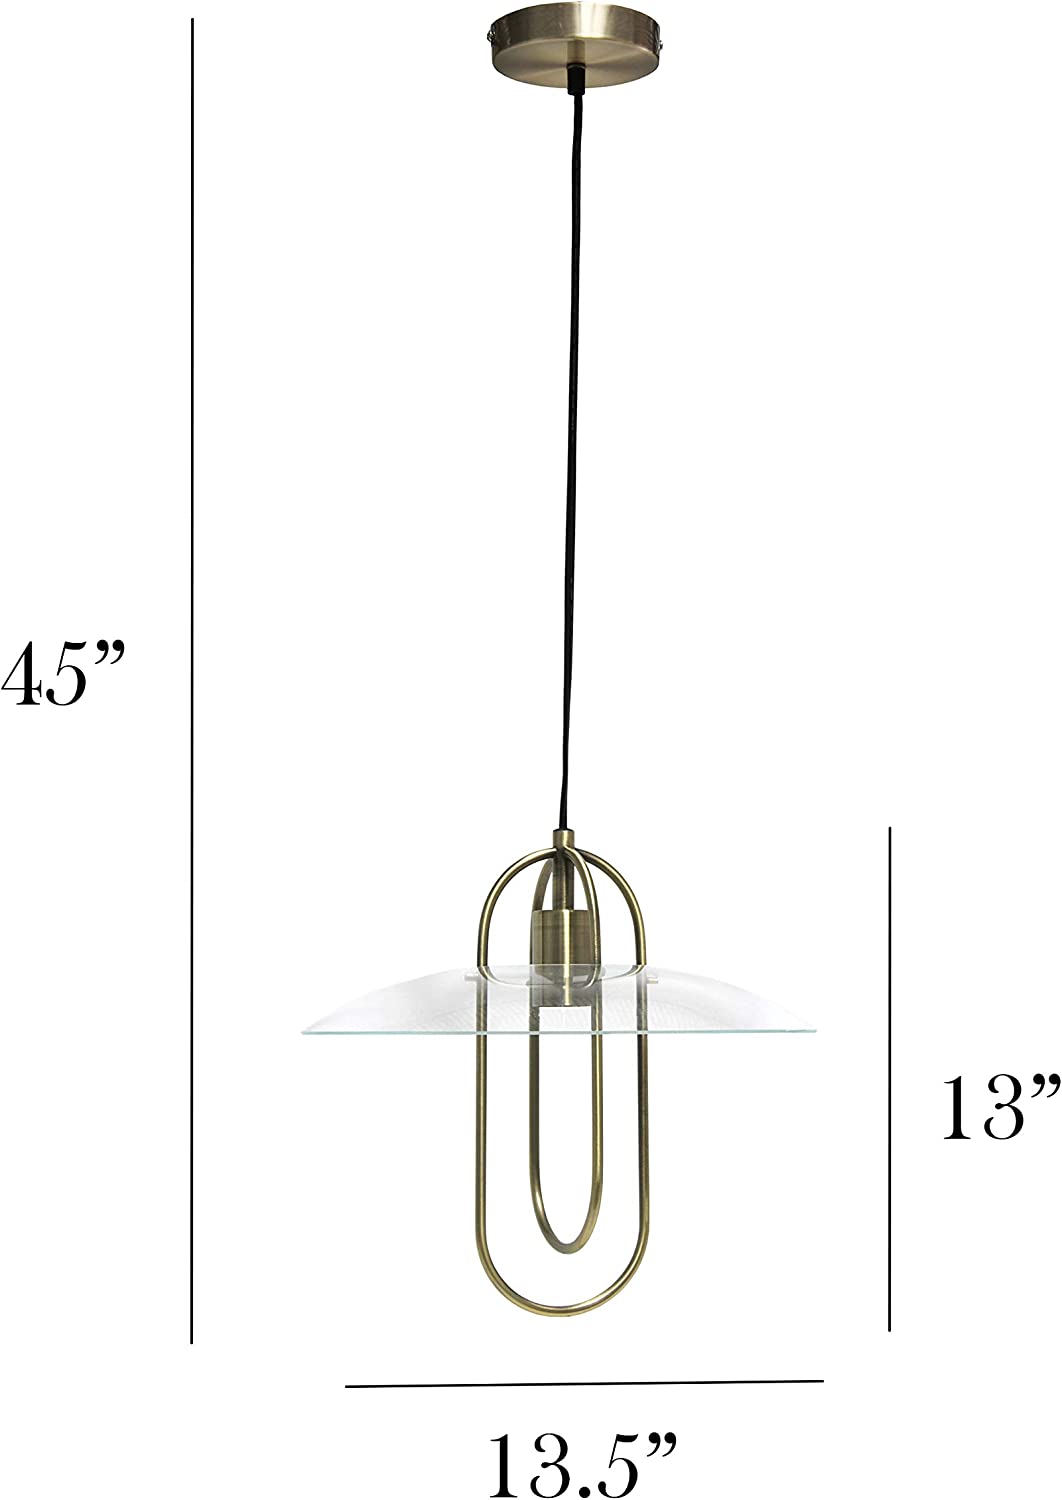 Simple Designs PT1008-ABS 1 Modern Metal Pendant Light, Antique Brass